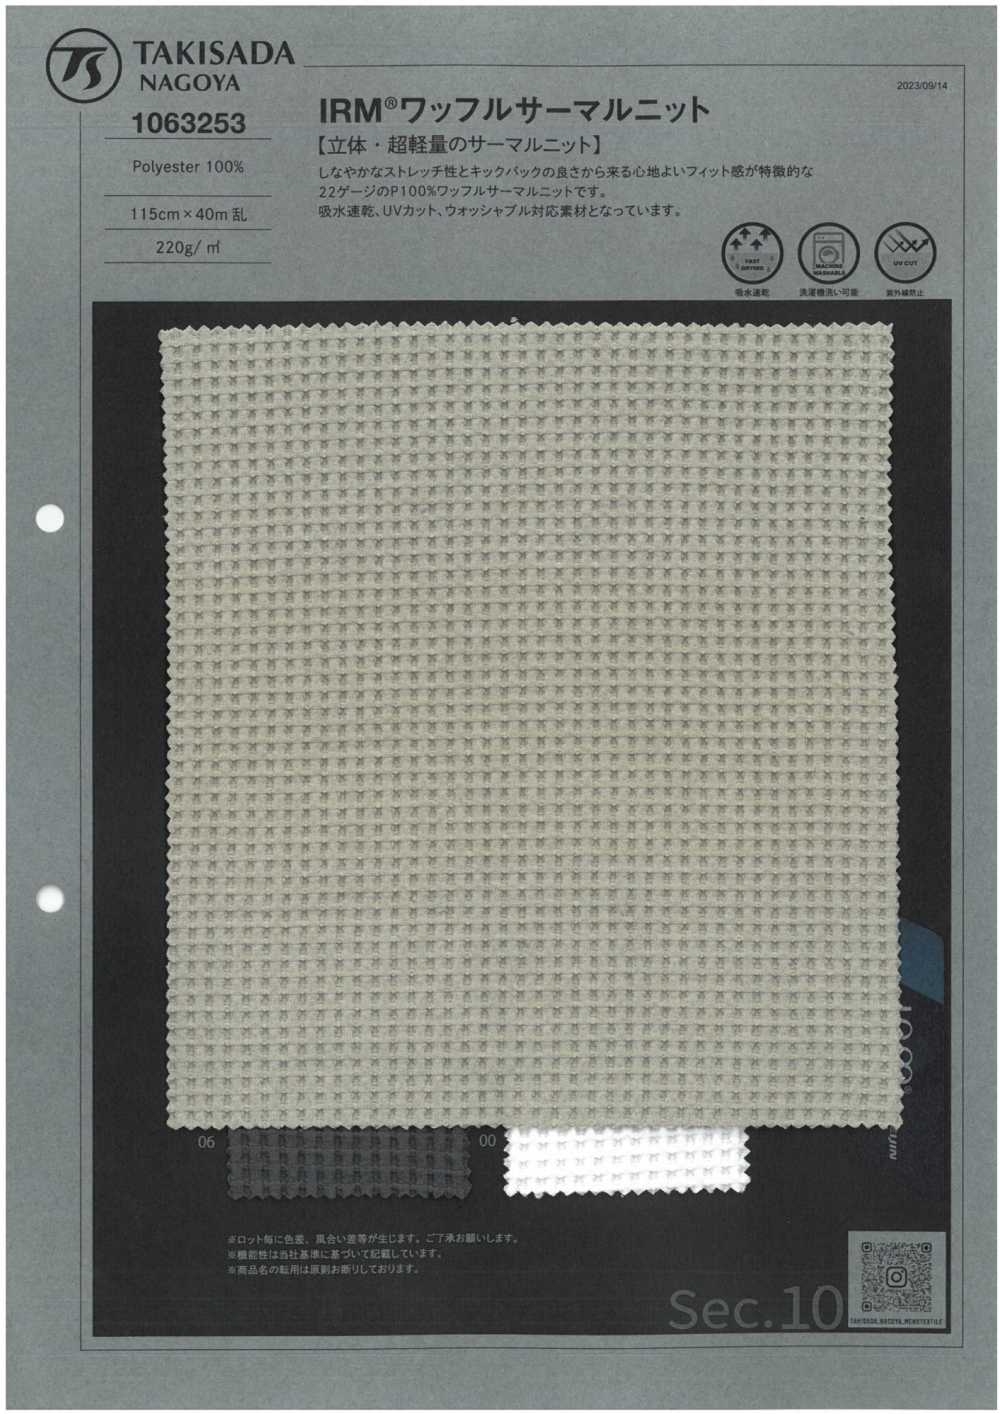 1063253 Malha Térmica IRM® Waffle Knit[Têxtil / Tecido] Takisada Nagoya